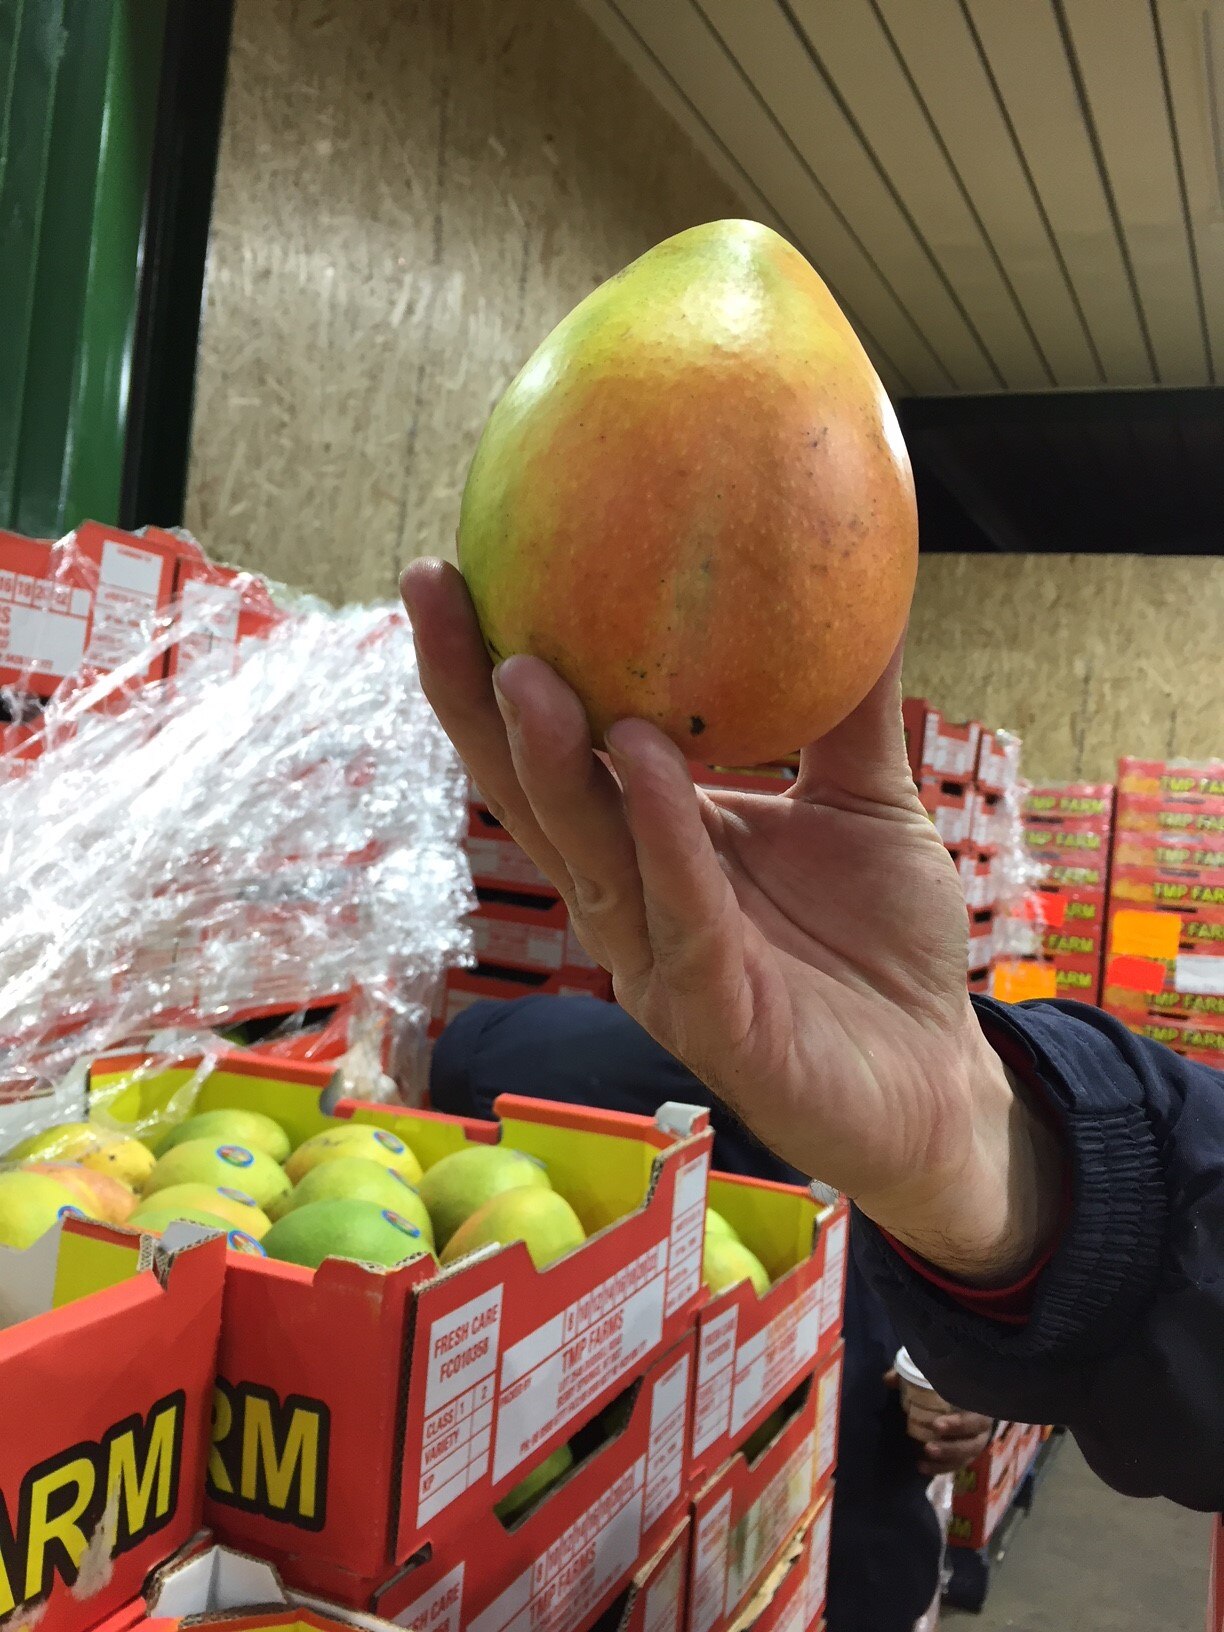 Very big mangos